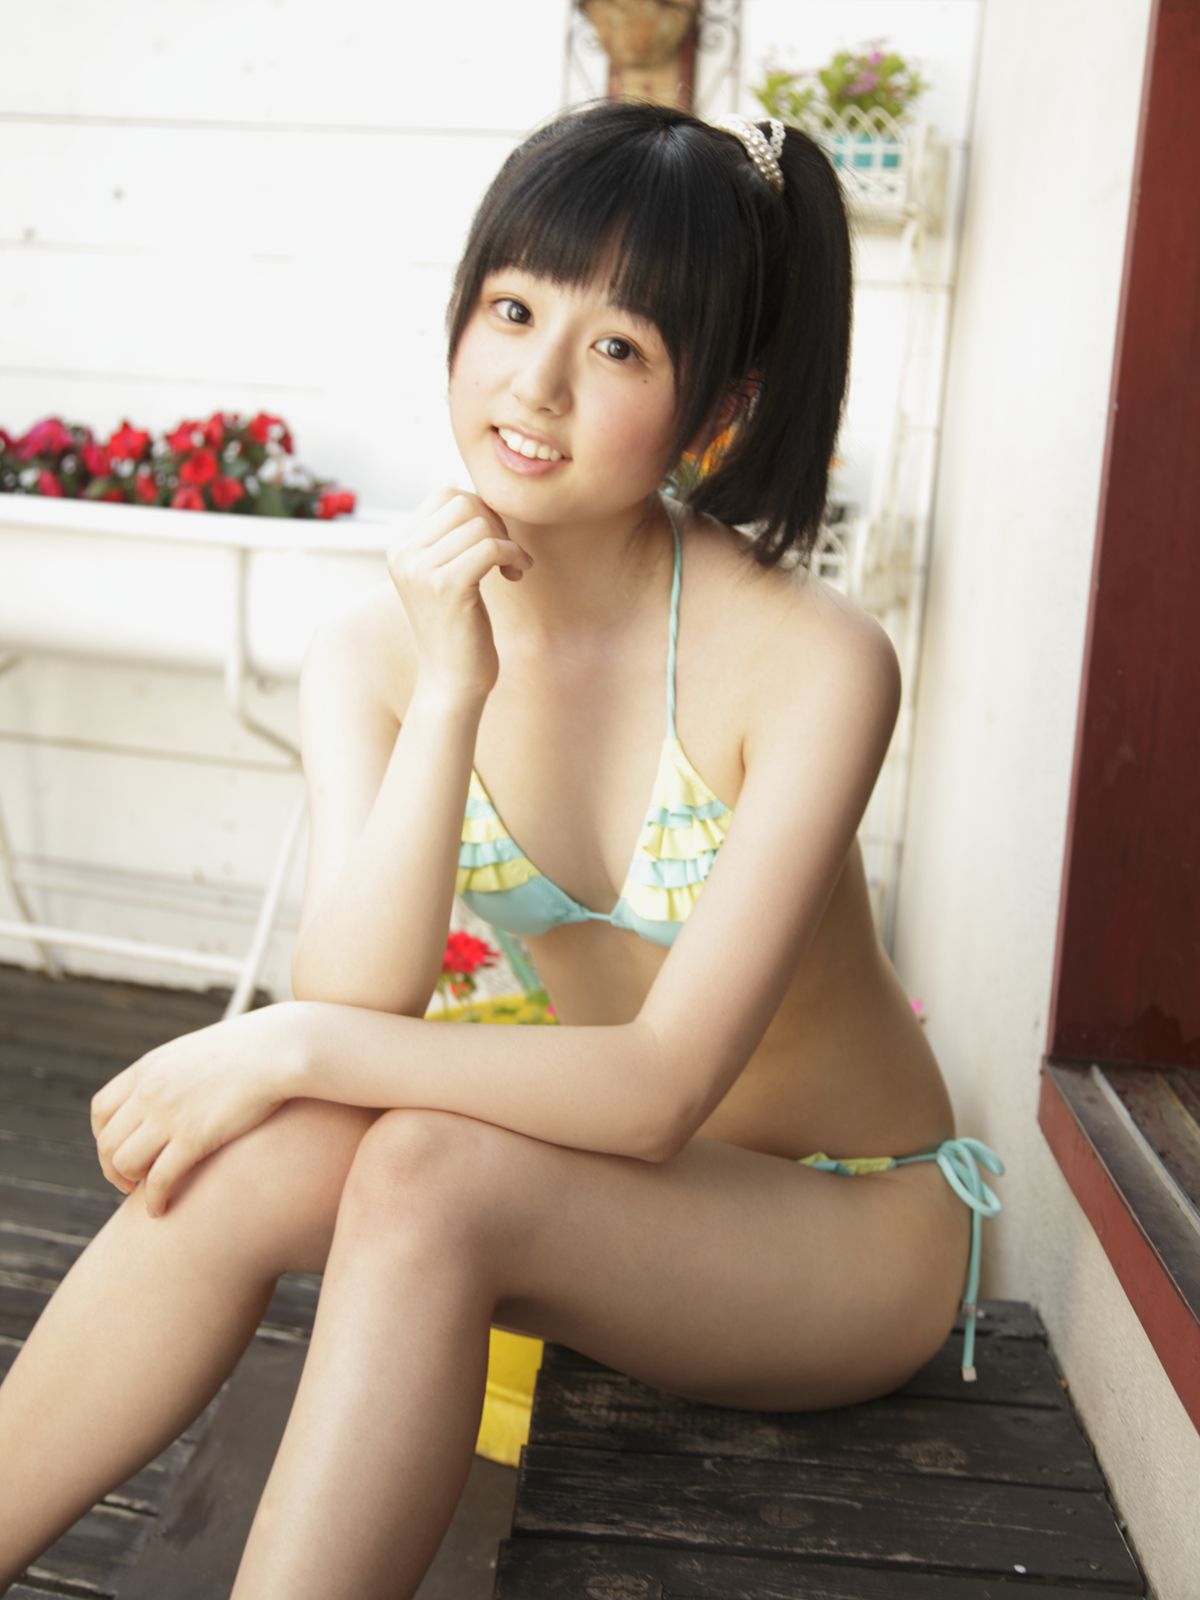 Pretty Japanese Girl in sexy bikini. So Cute!!!